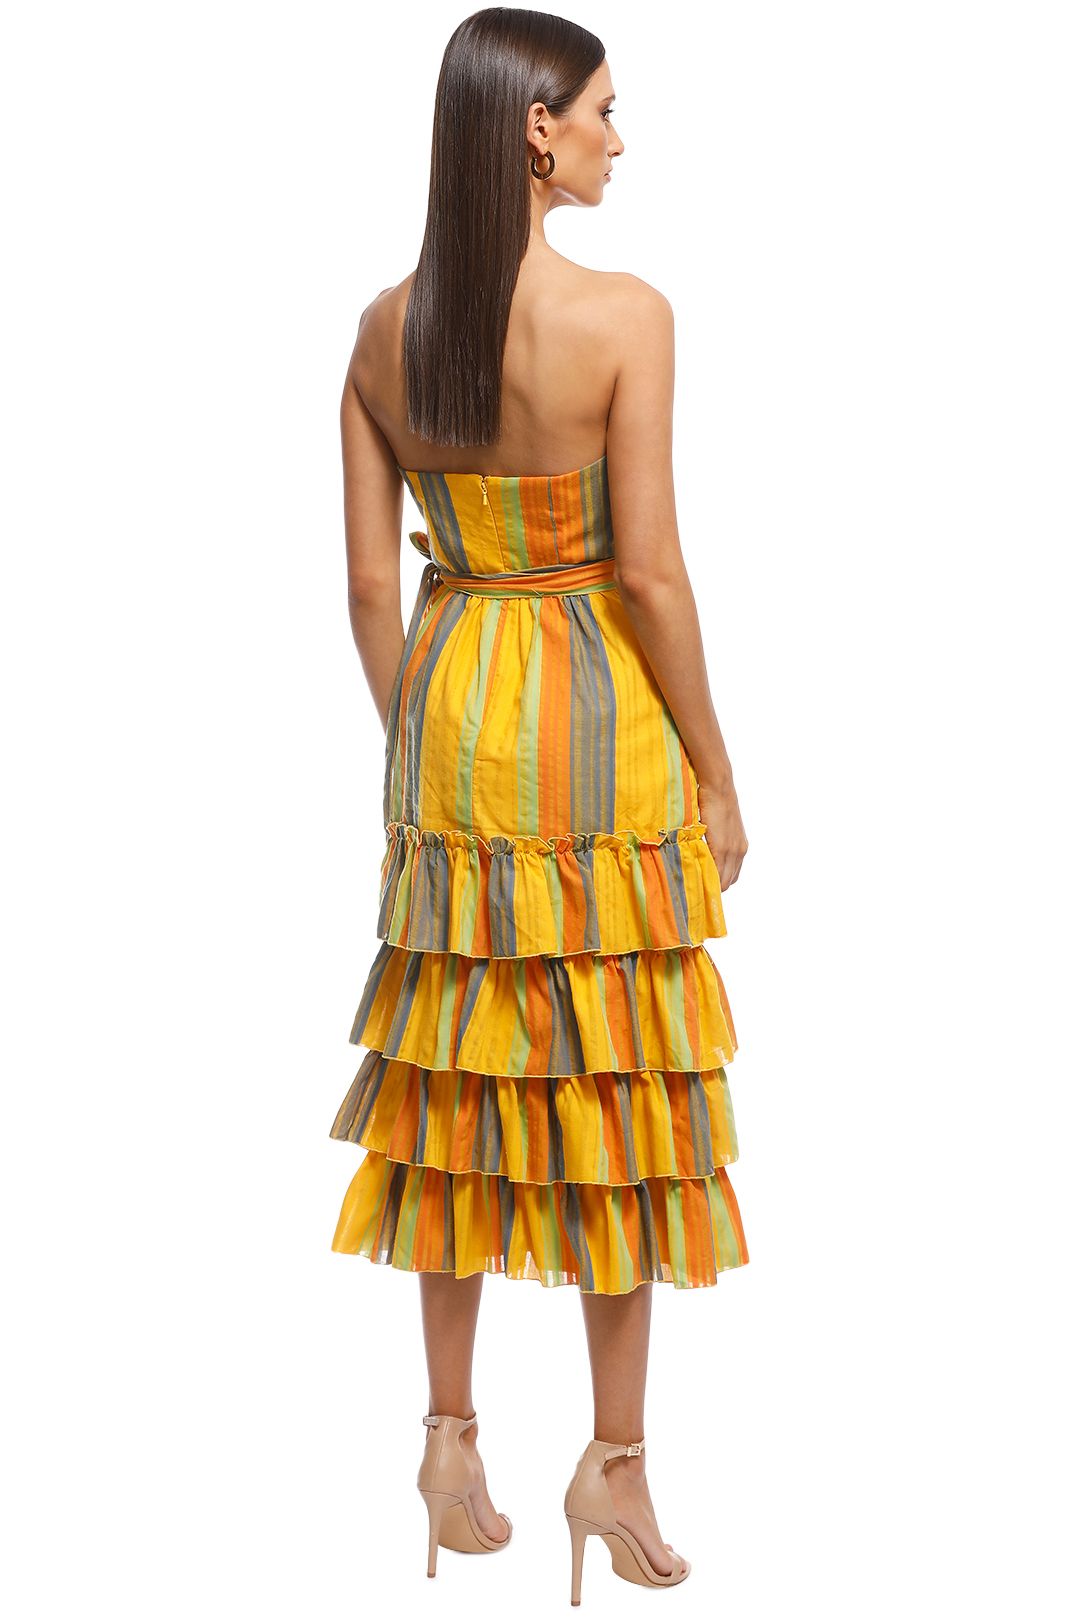 Talulah - Imperial Midi Dress - Yellow Stripes - Back